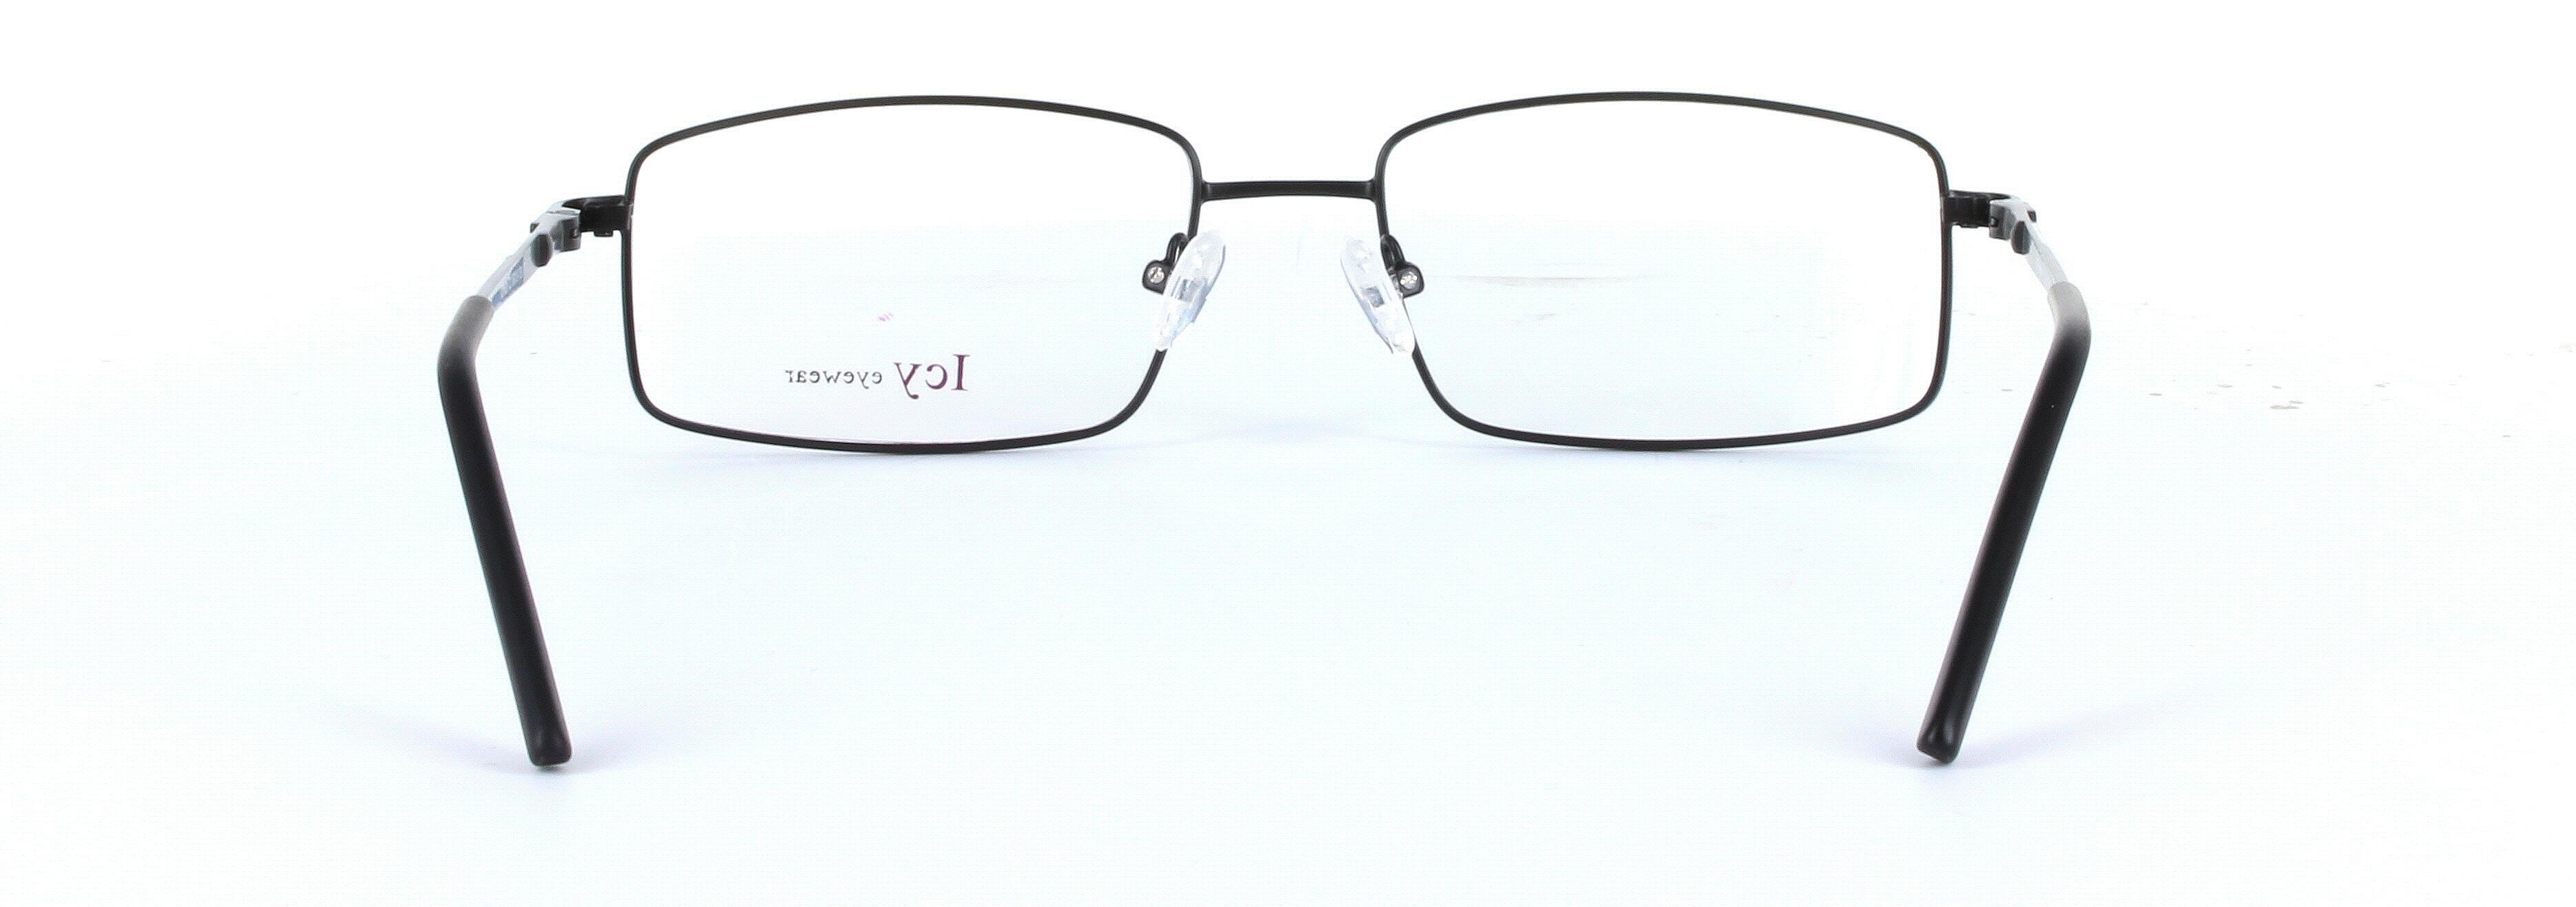 Chester Black Full Rim Rectangular Metal Glasses - Image View 3